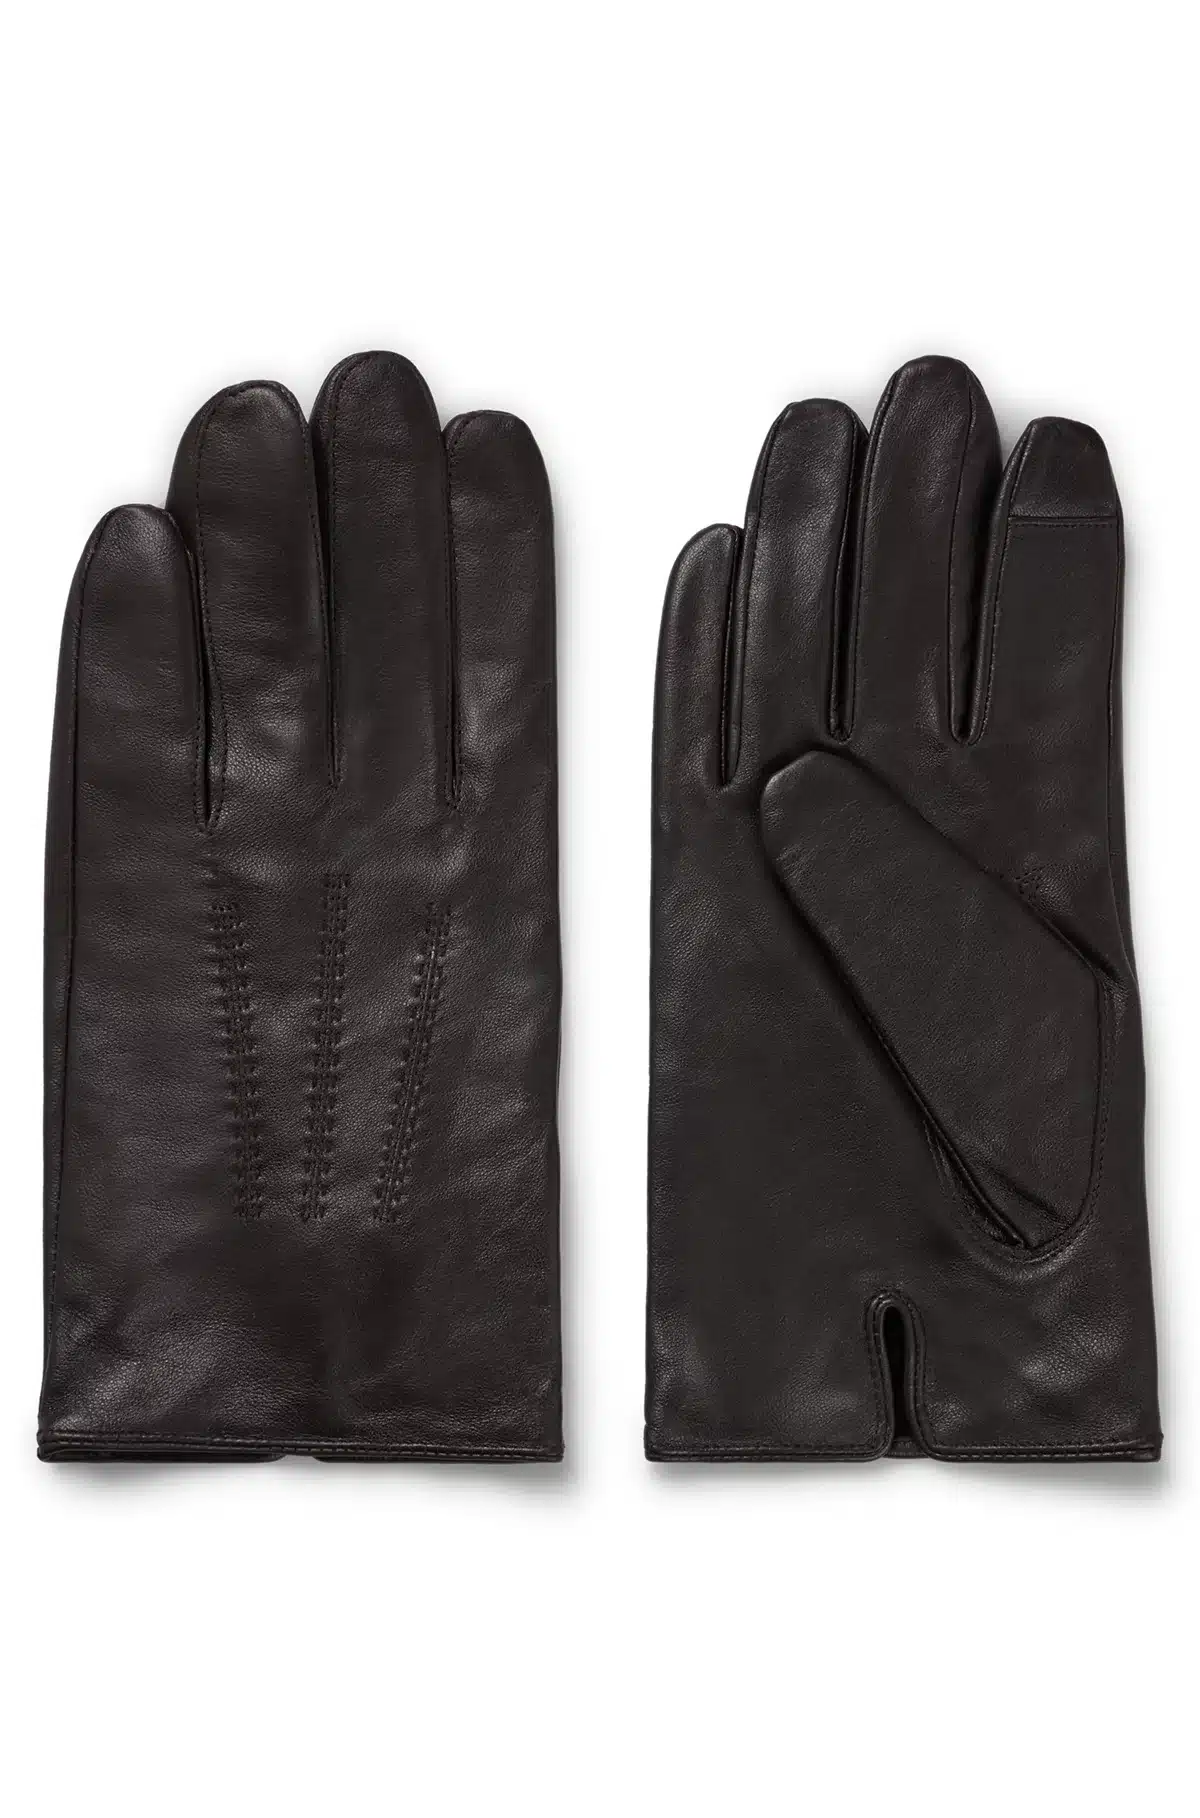 Gloves - Store Scandinavian Boss Brown Leather Dark Buy Fashion Hainz